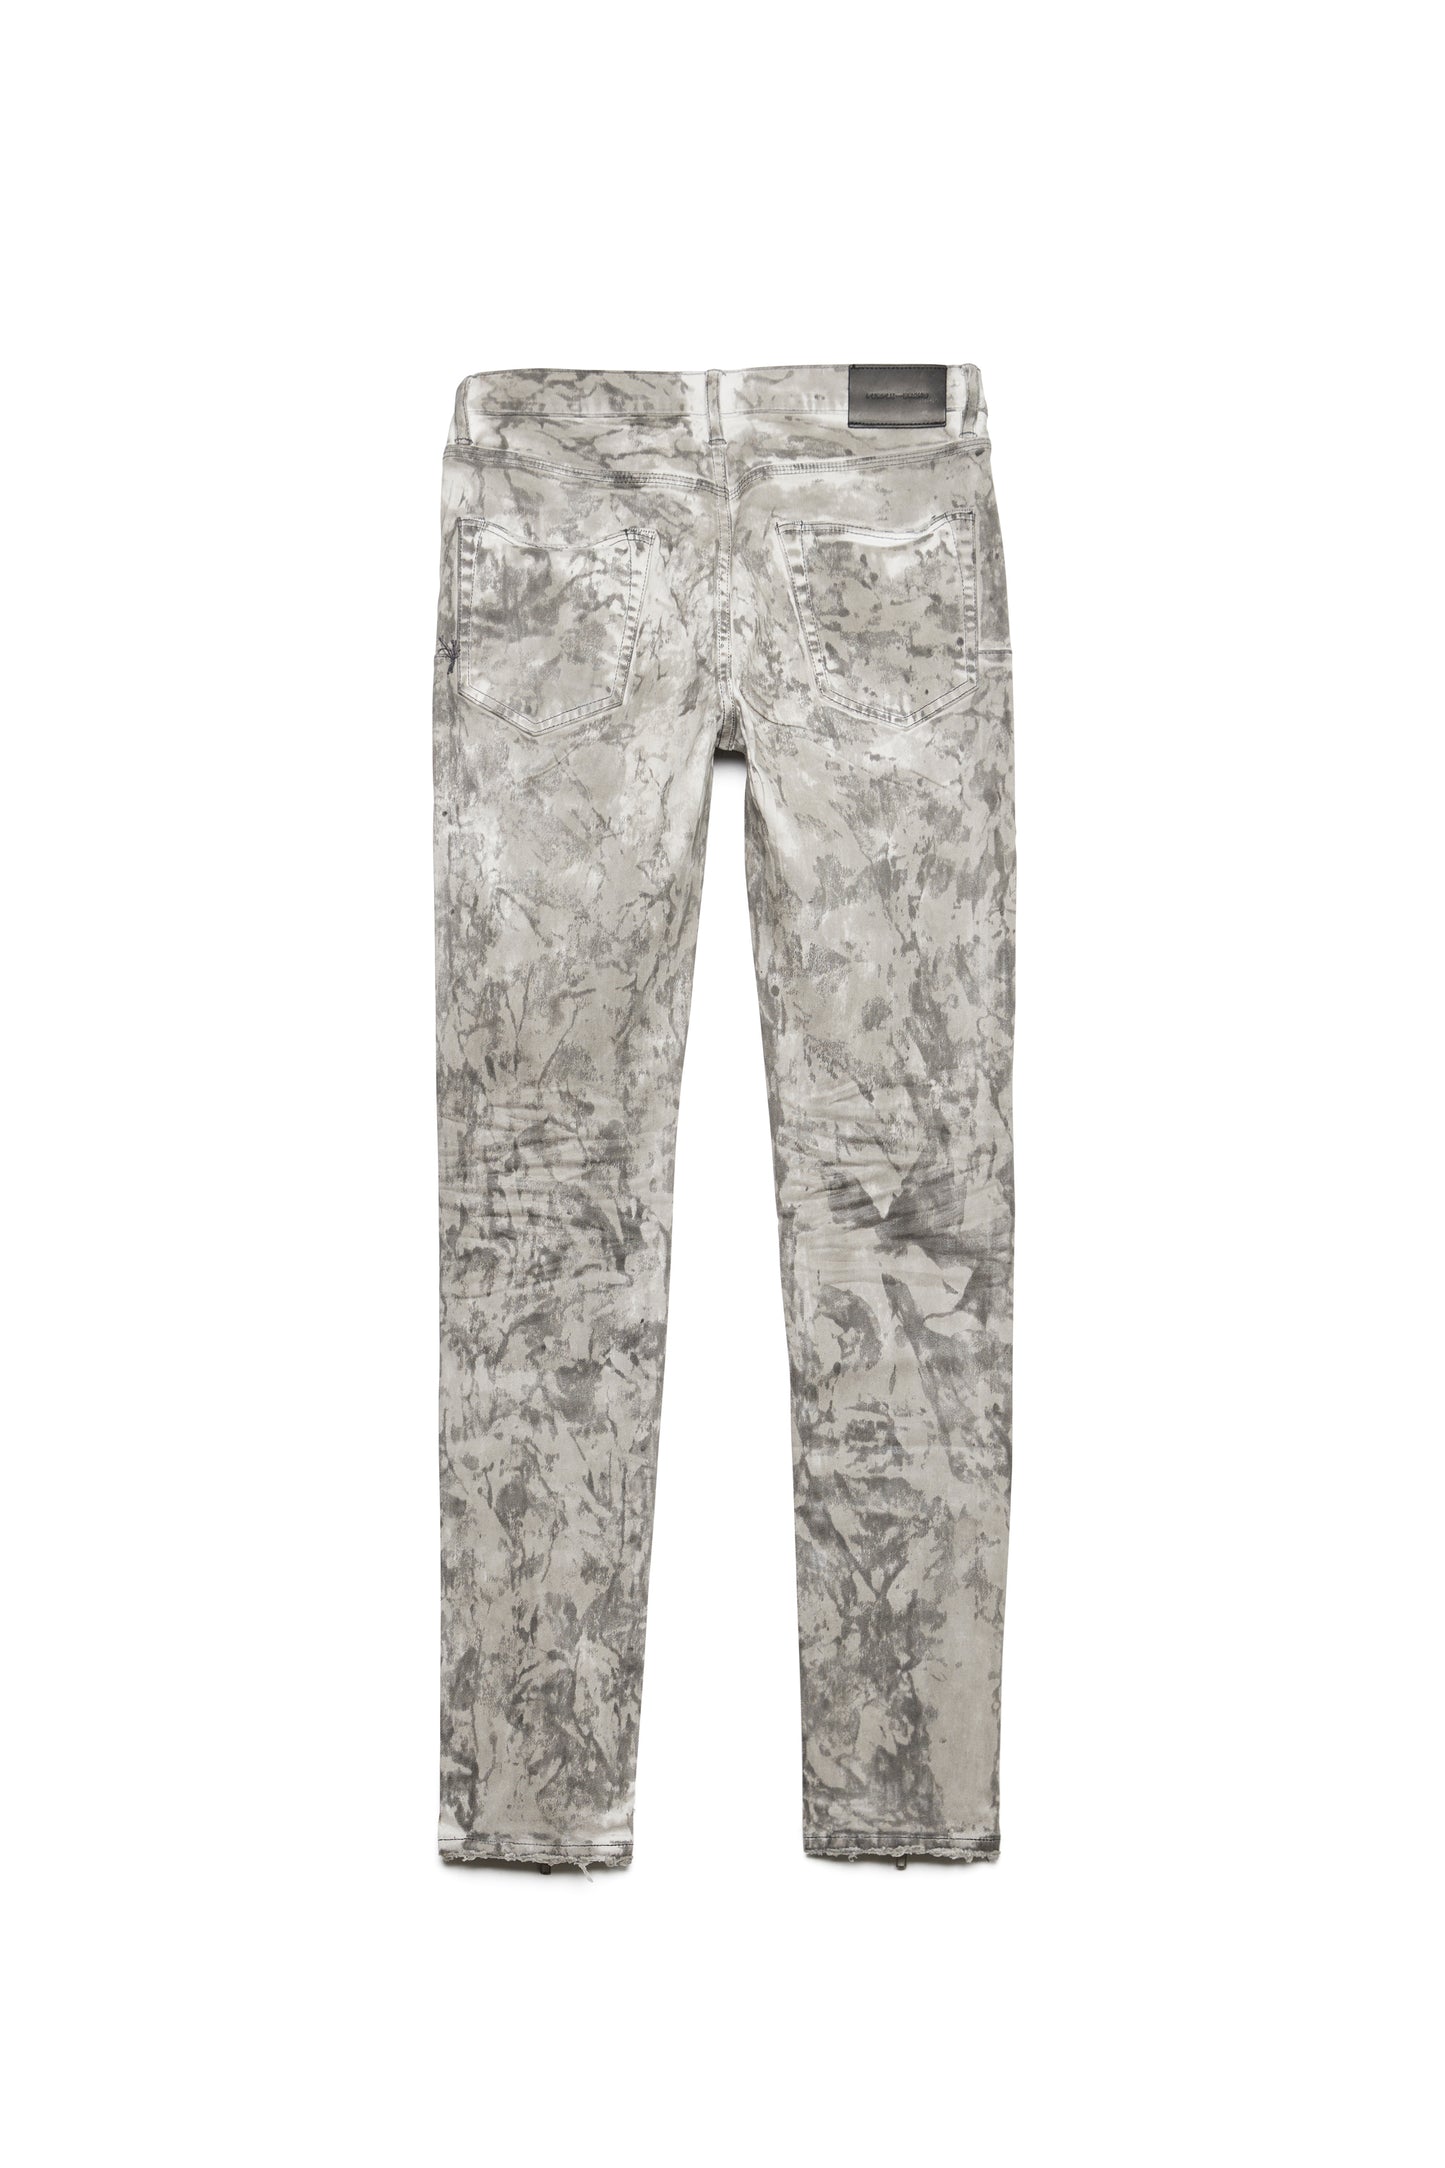 PURPLE BRAND - Men's Denim Jean - Low Rise Skinny - Style No. P001 - White Mechanic Dirty Front Zip - Back